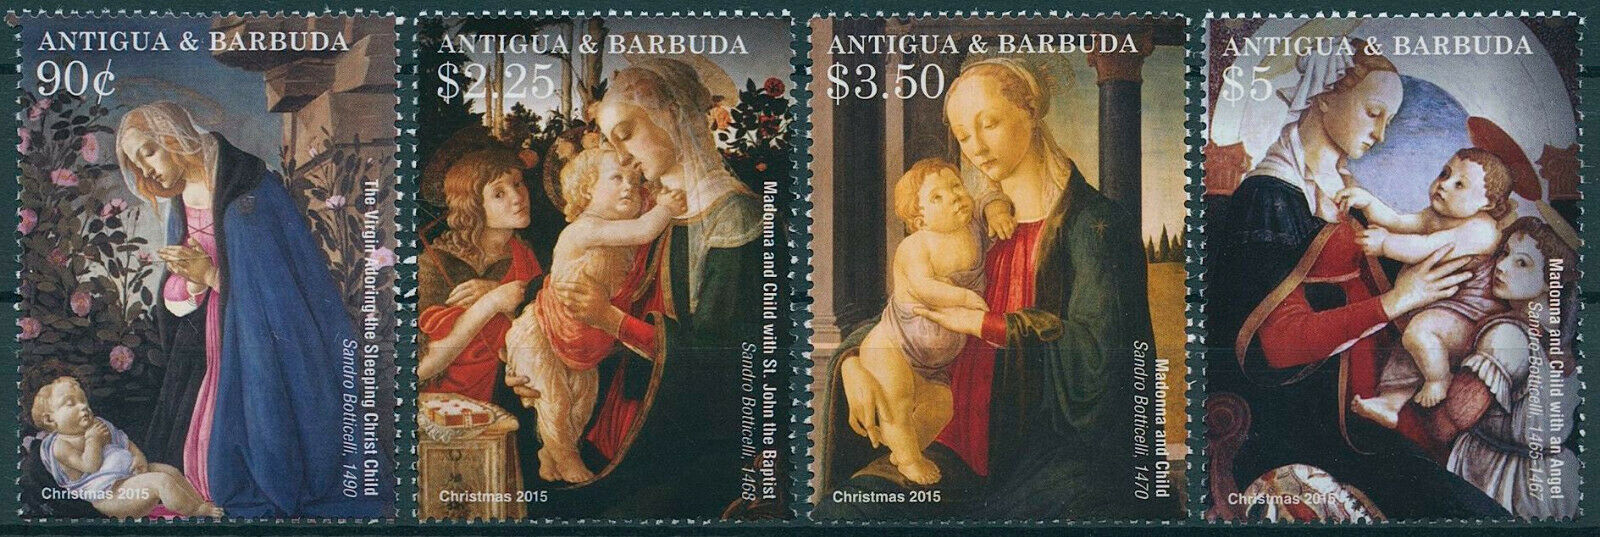 Antigua & Barbuda 2015 MNH Christmas Stamps Botticelli Nativity Paintings 4v Set